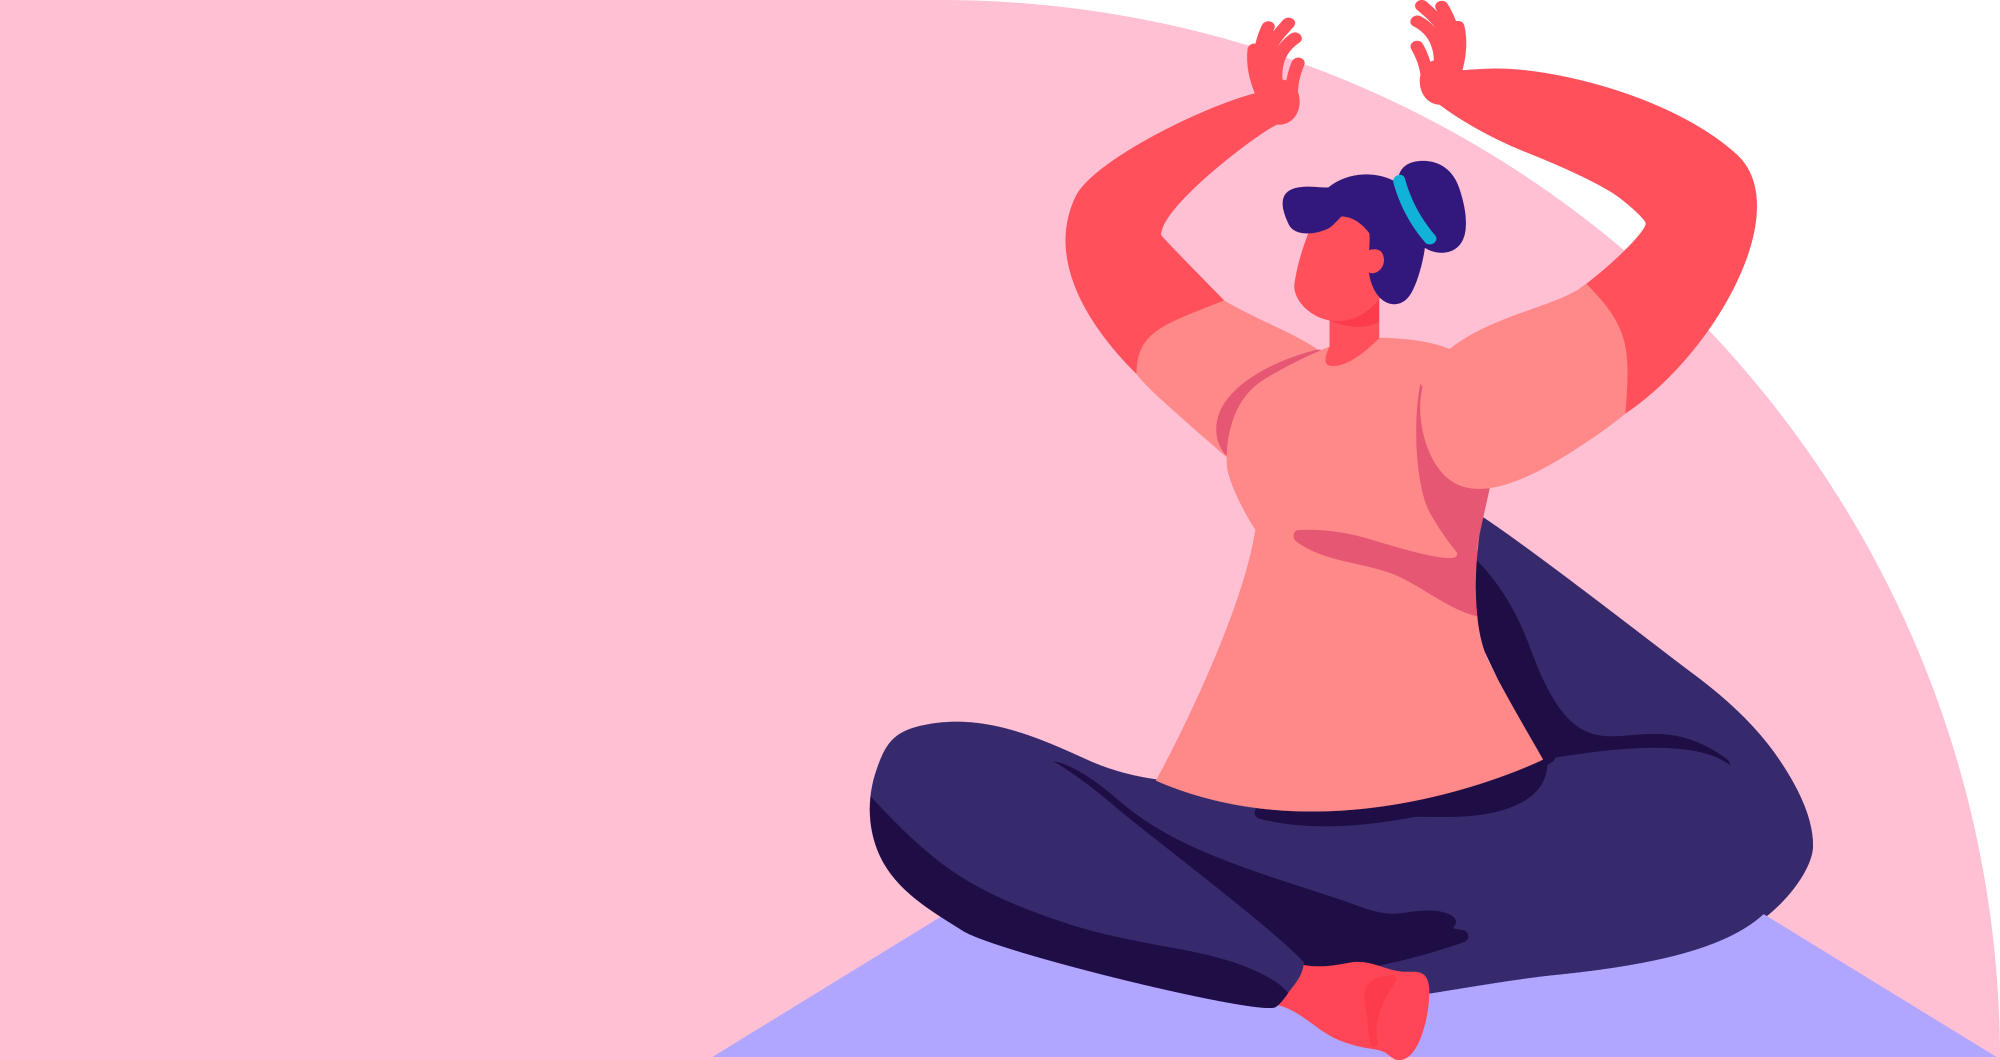 Bid Goodbye To Period Pain With 6 Easy Yoga Poses By Namita Piparaiya |  Femina.in